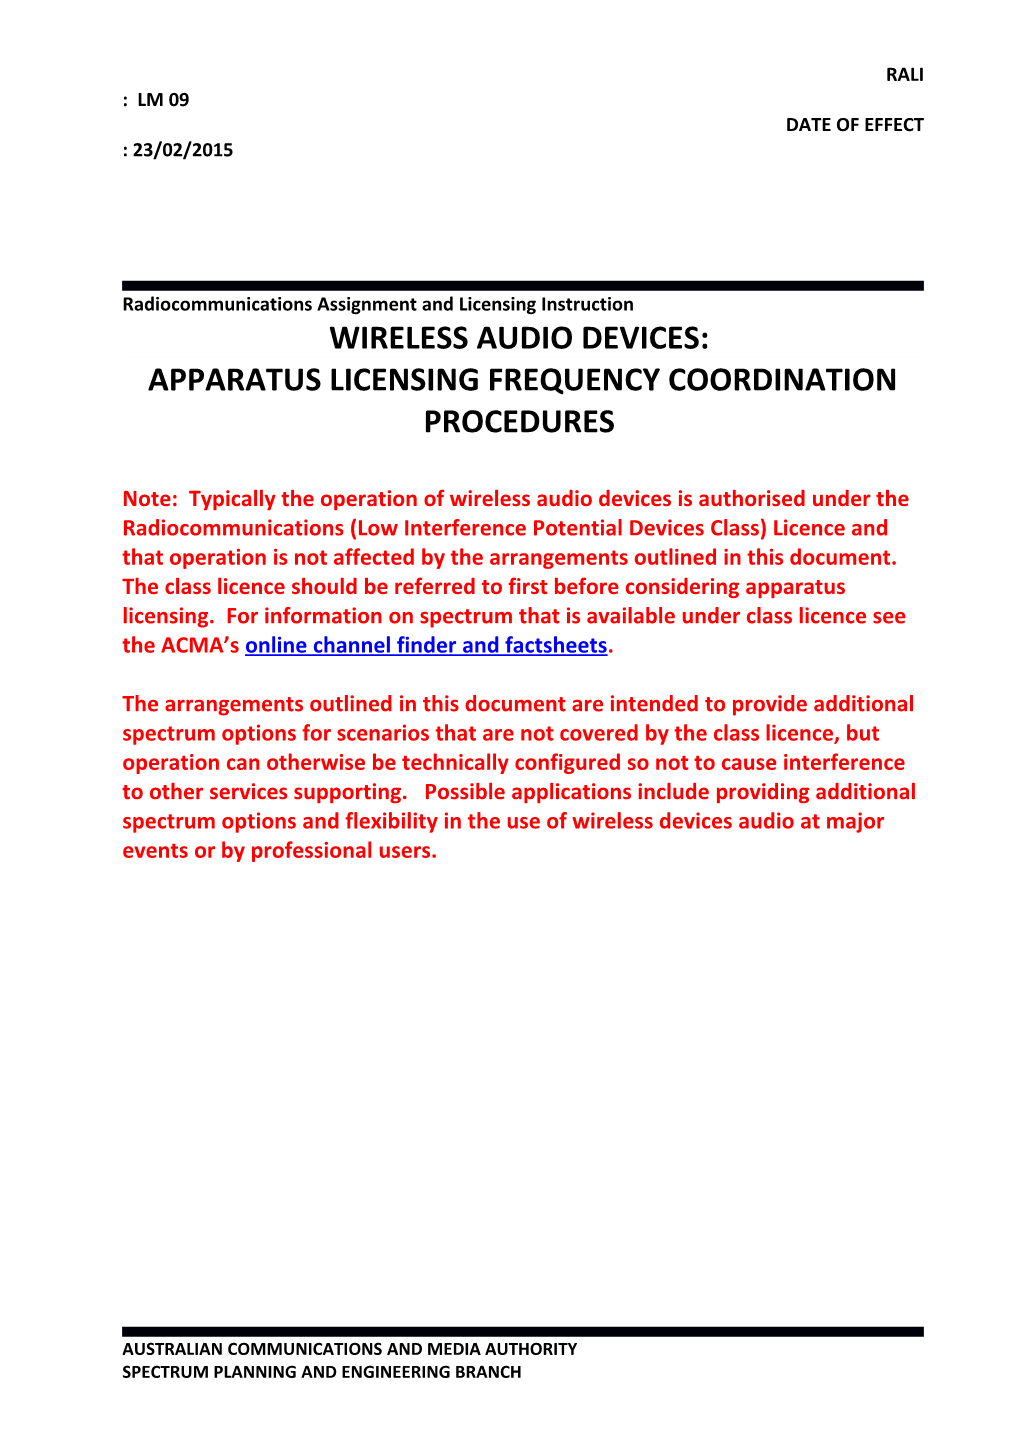 Apparatus Licensing Frequency COORDINATION PROCEDURES